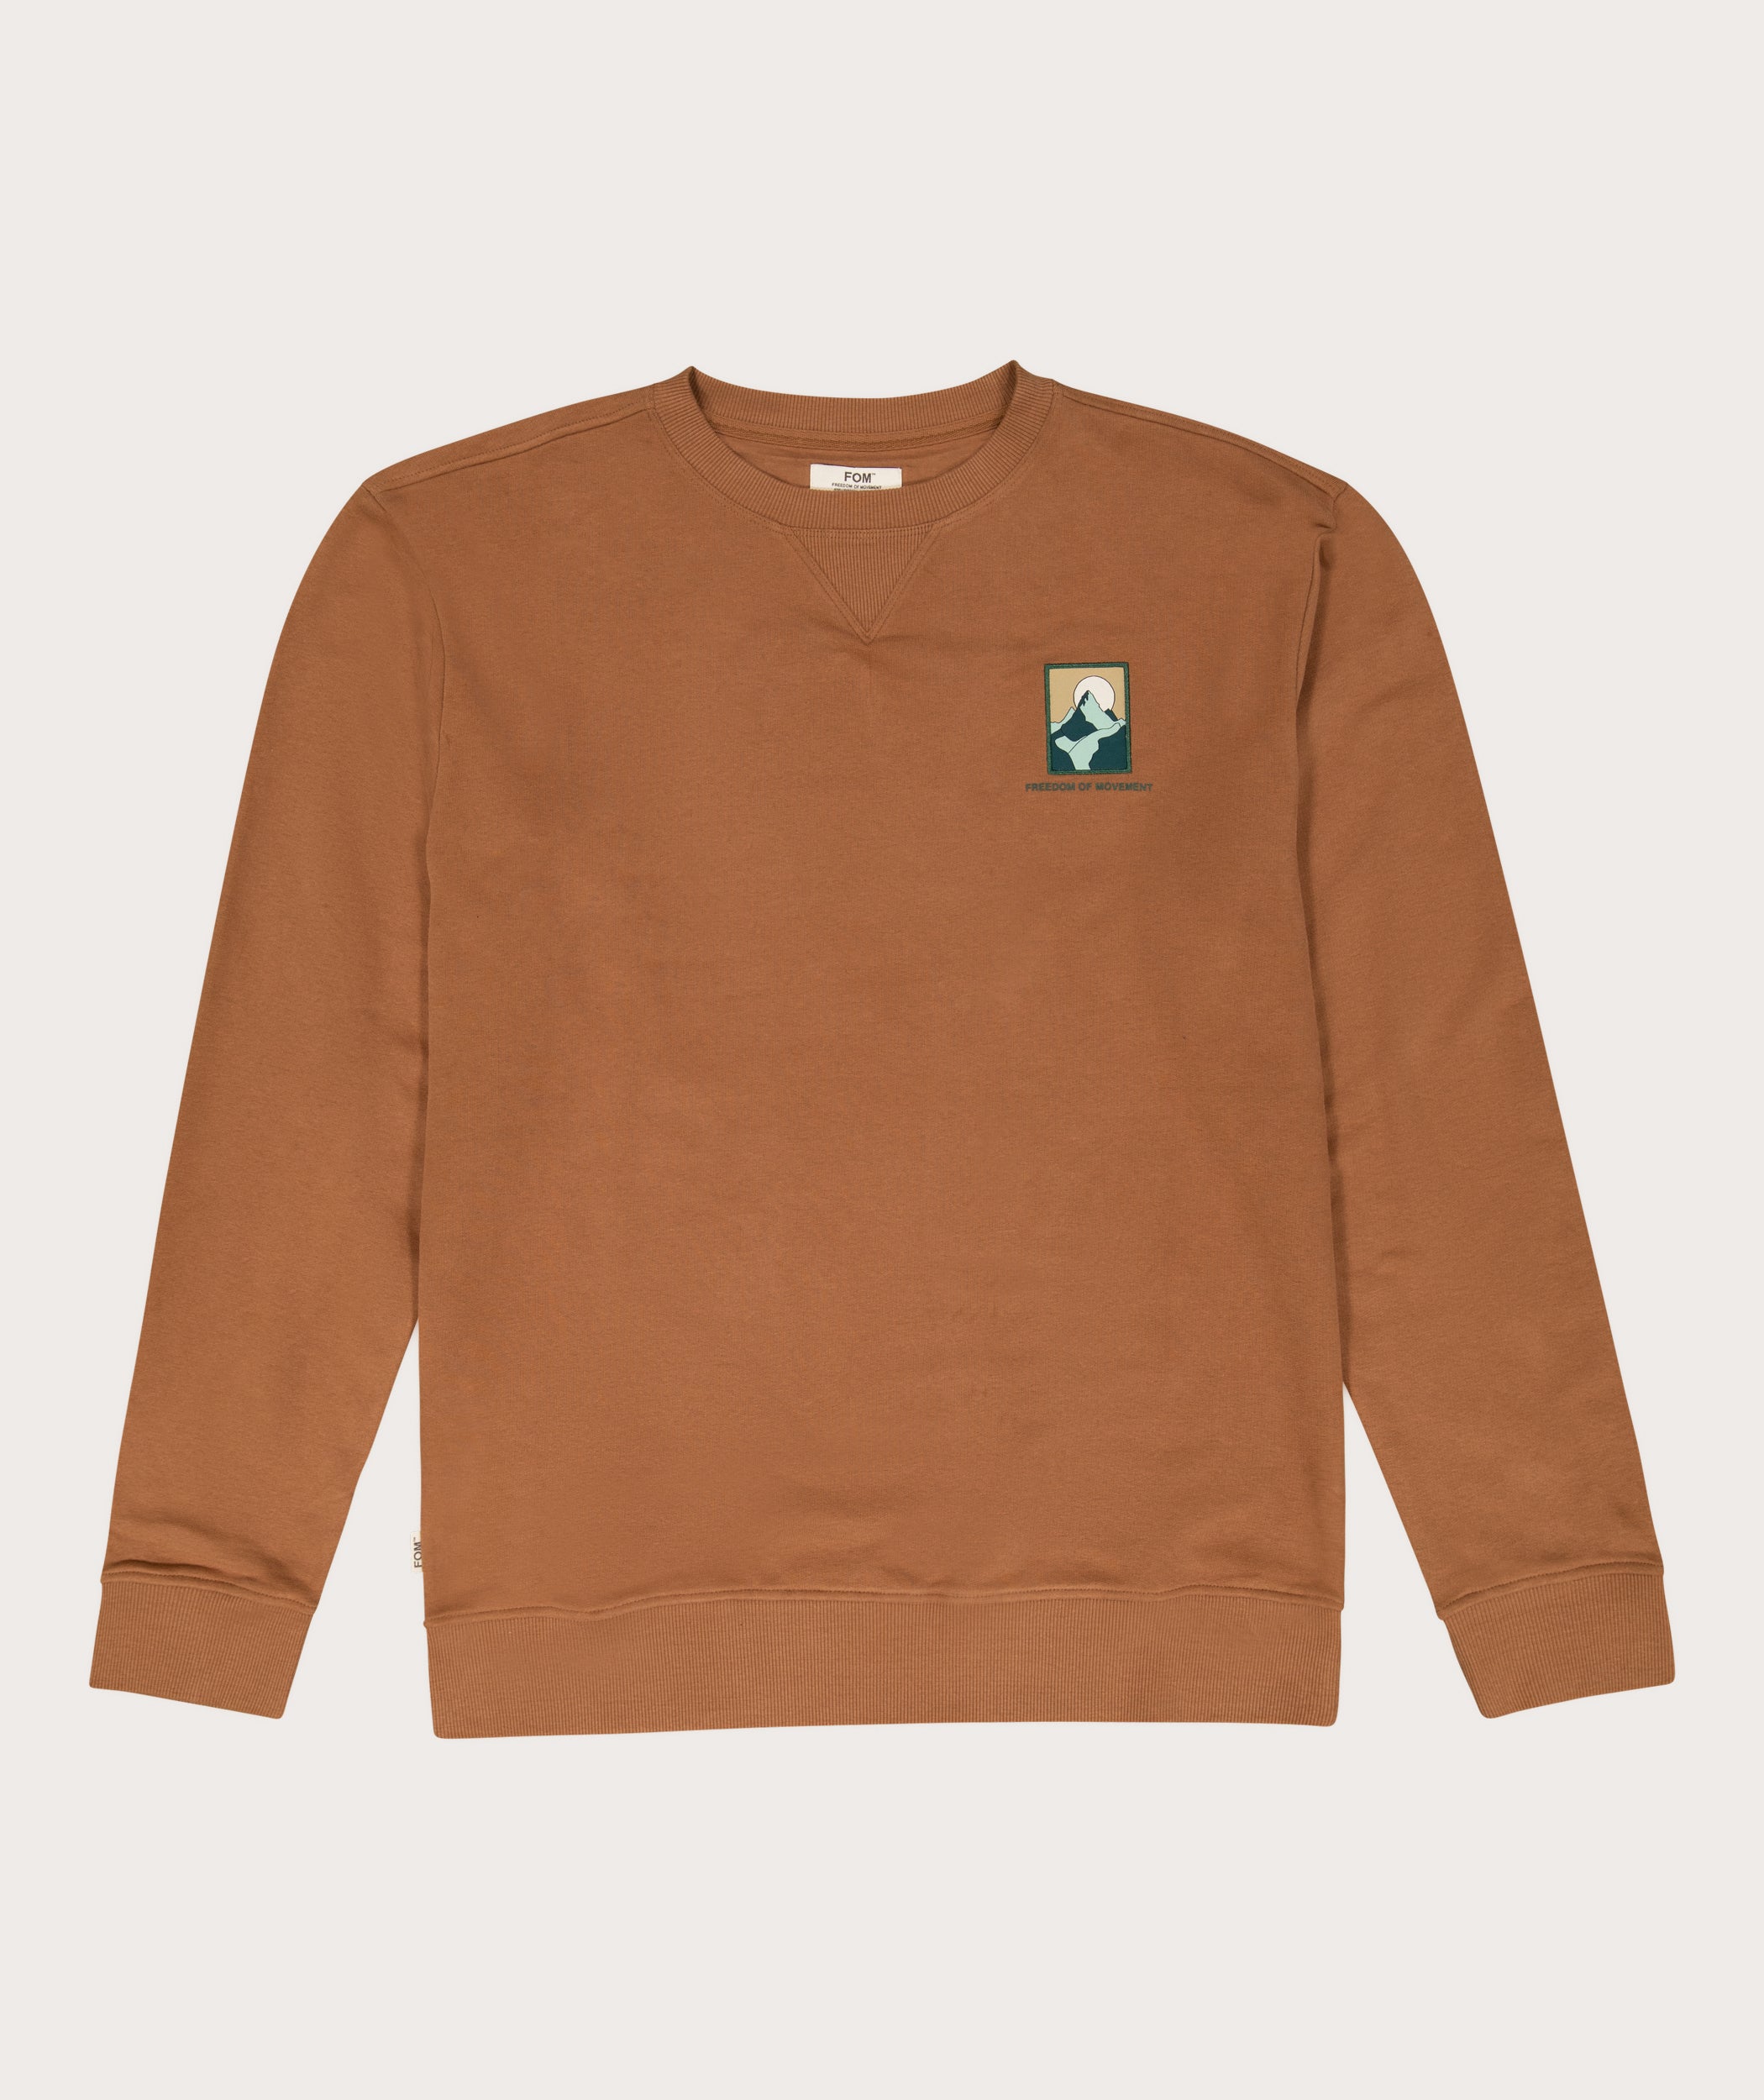 Mens Crew Neck Sweater - Caramel